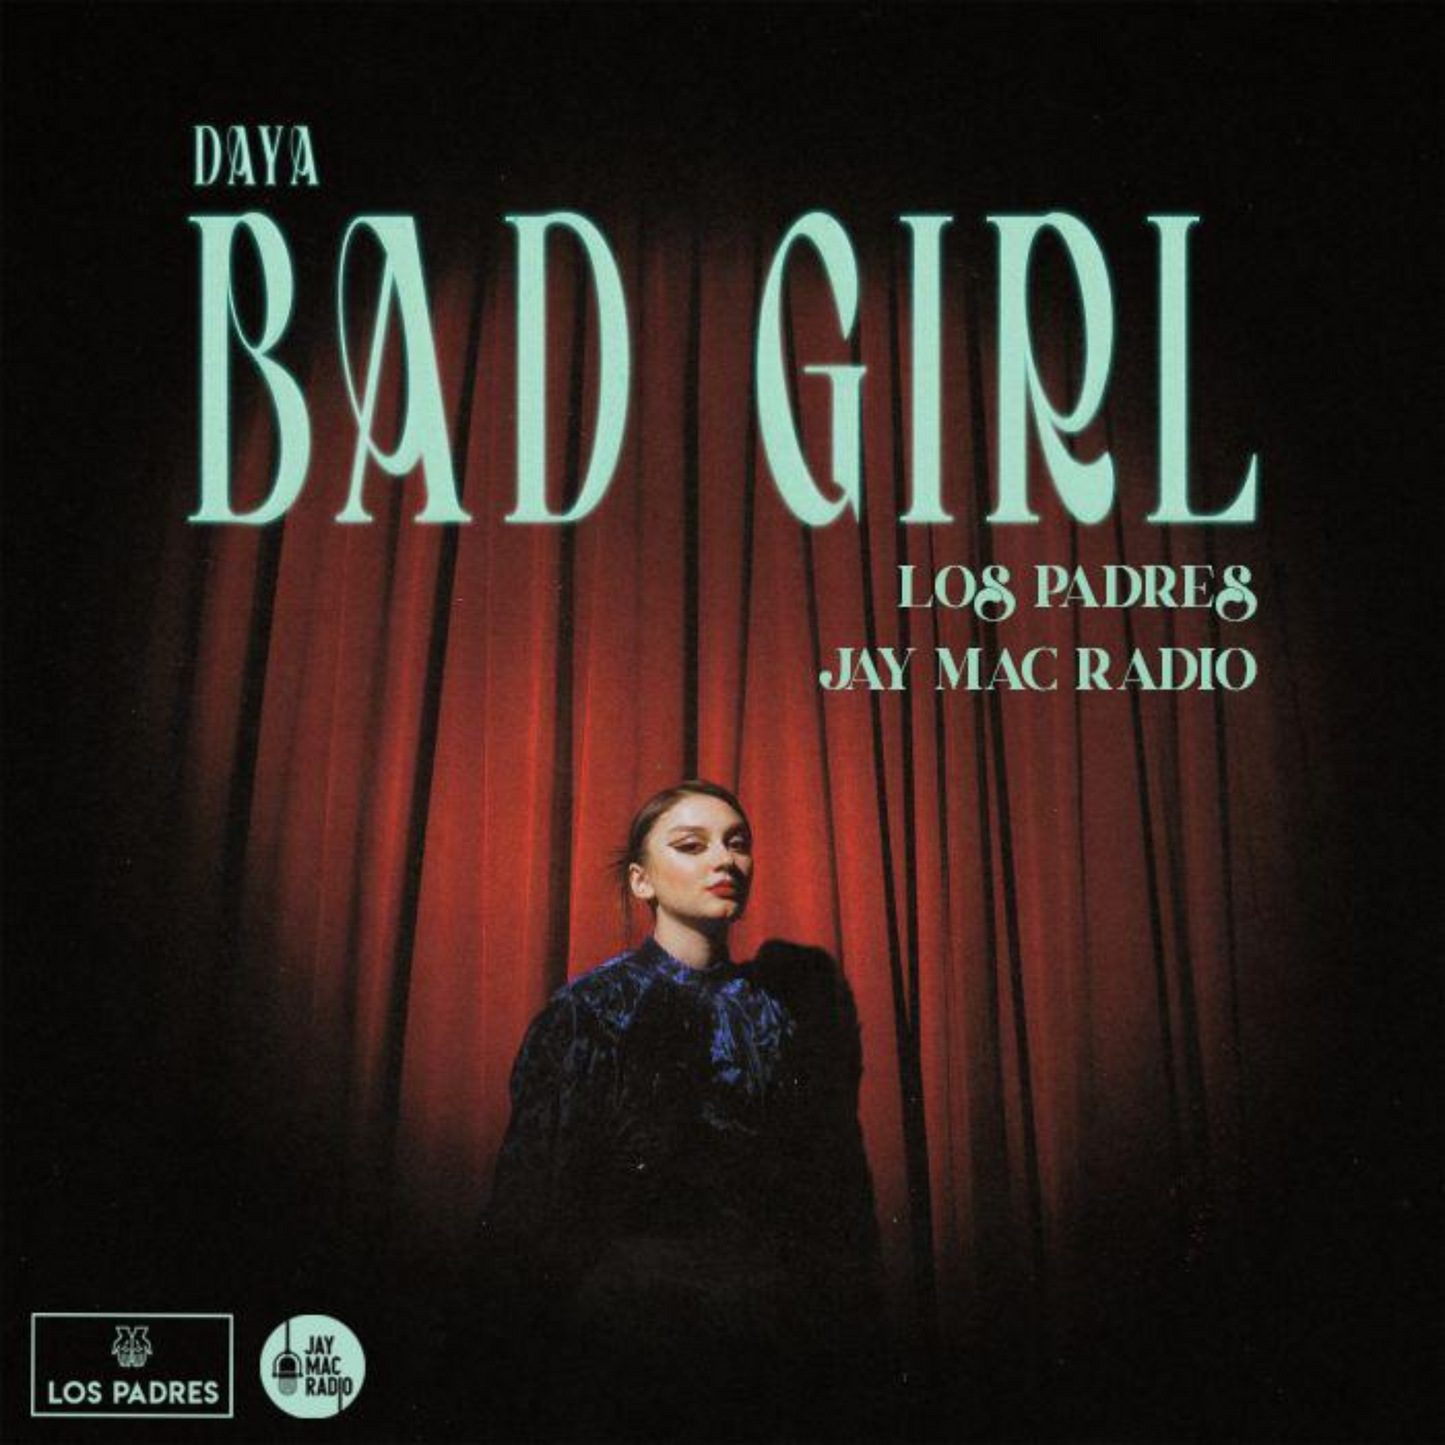 Daya - Bad Girl (Los Padres & Jaymac Remix)